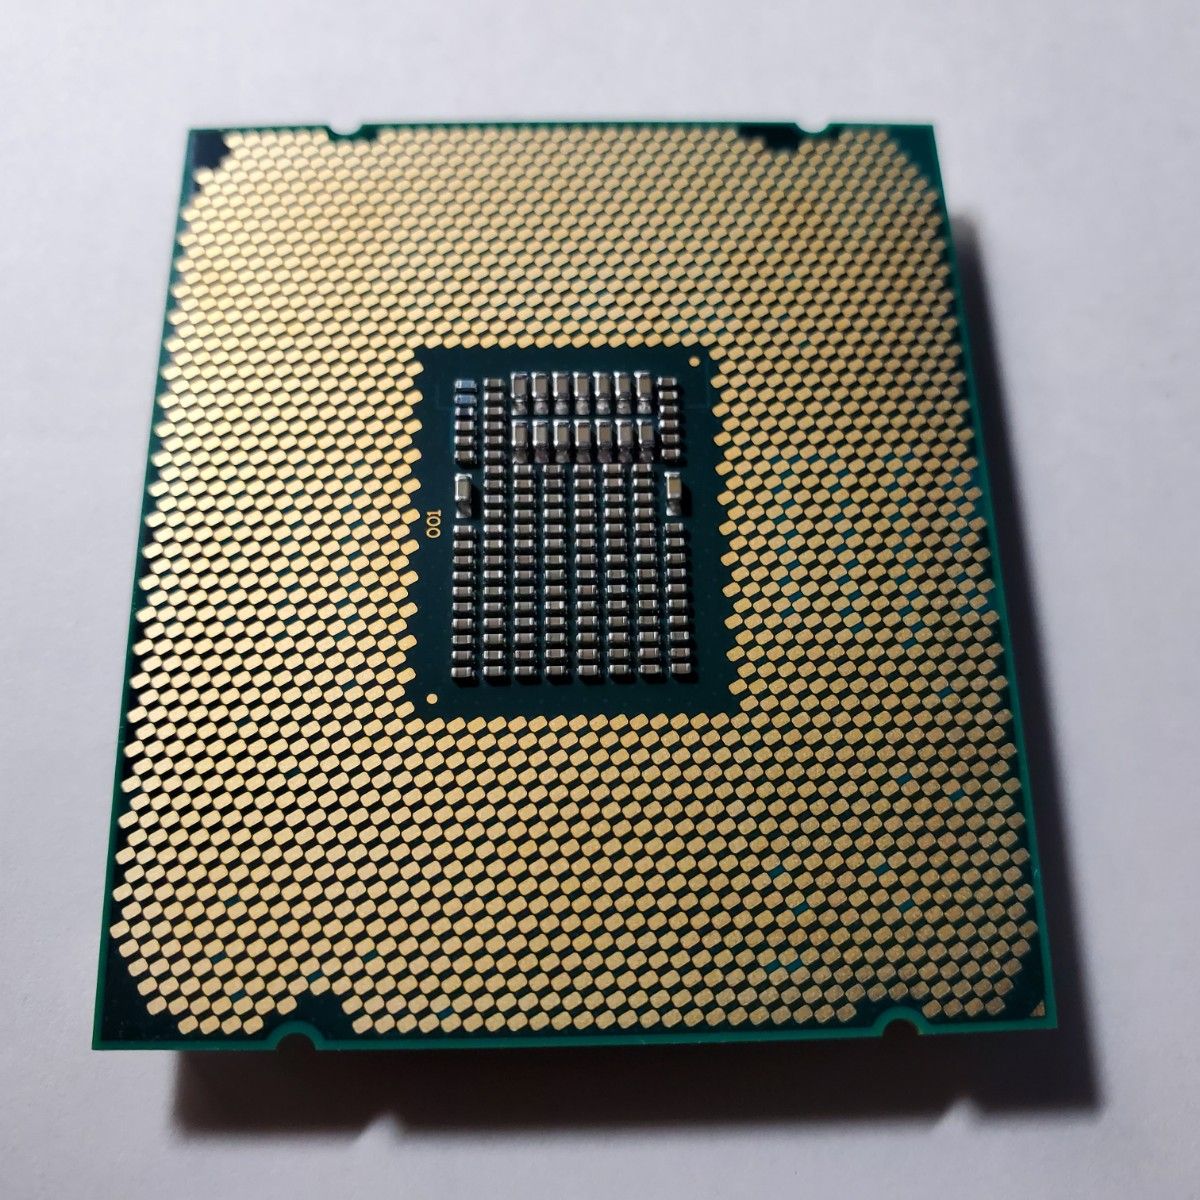 CPU Intel Xeon W-2123 3.60GHz